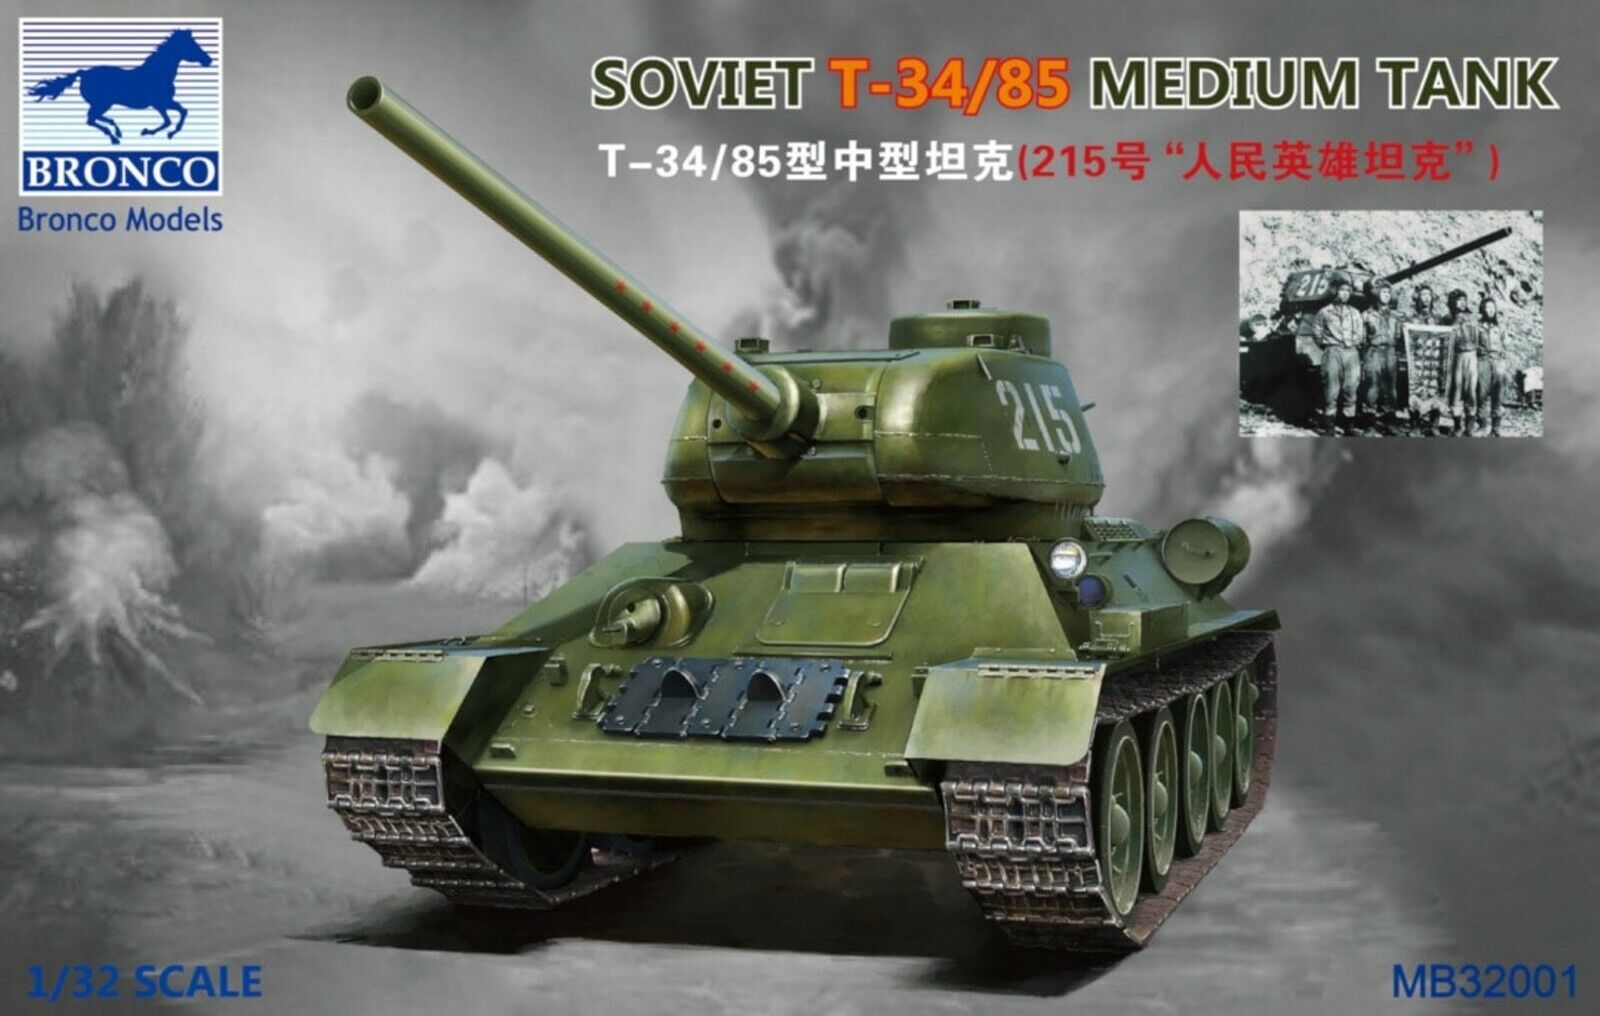 Bronco 1/32nd Scale Soviet T34-85 Medium Tank Kit No. MB32001